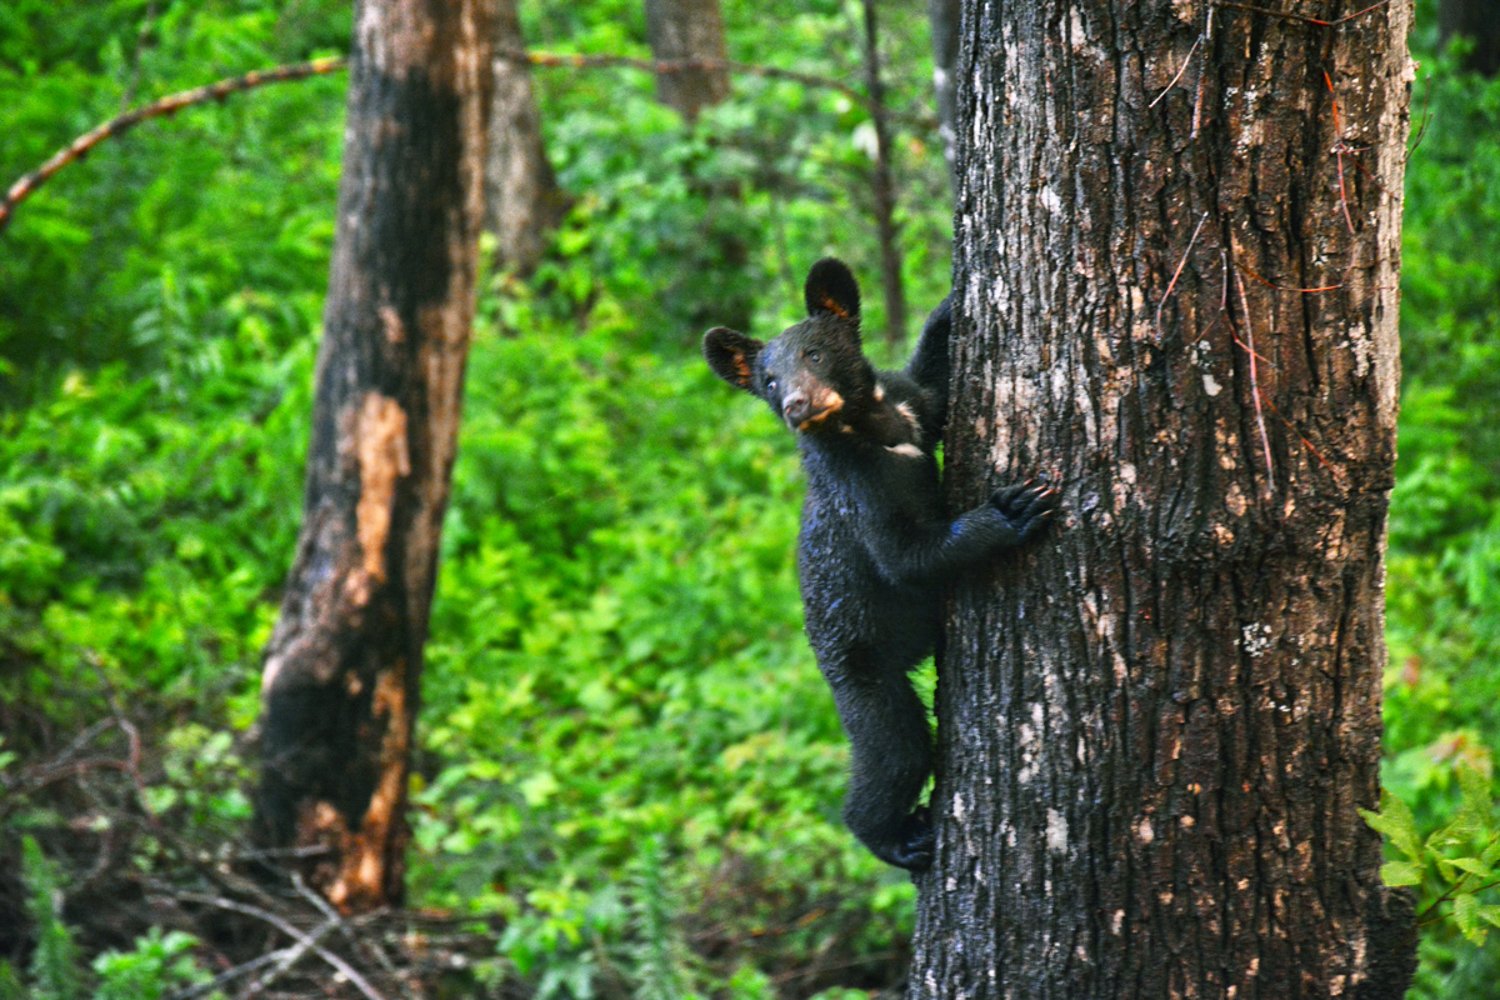 Black bear cub in a tree (photo courtesy of Anakeesta.com)